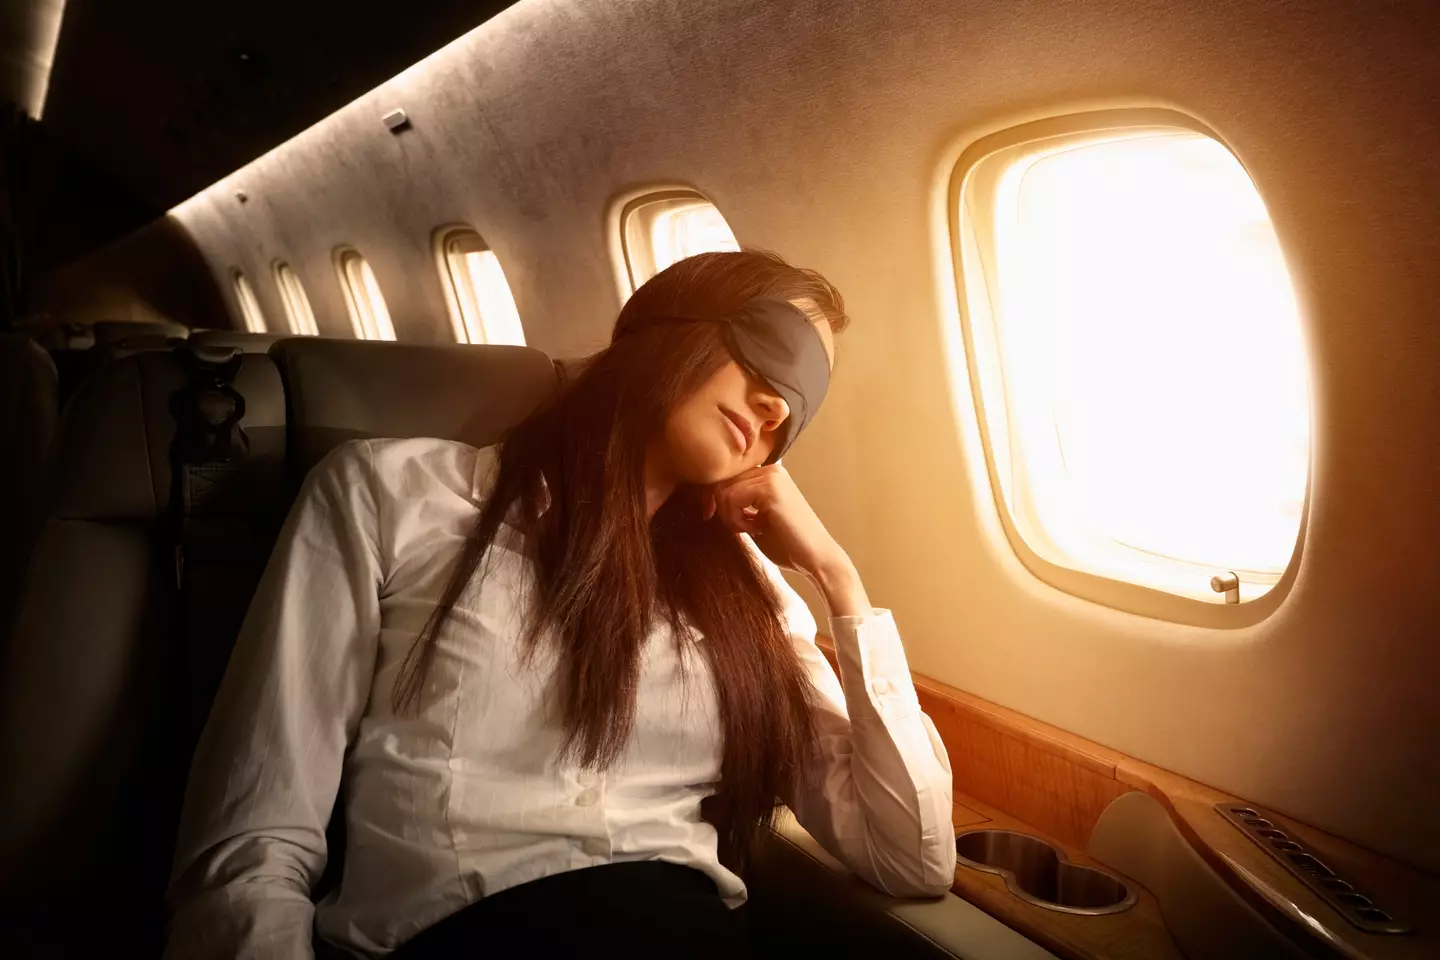 A woman made a key mistake on a long-haul flight.